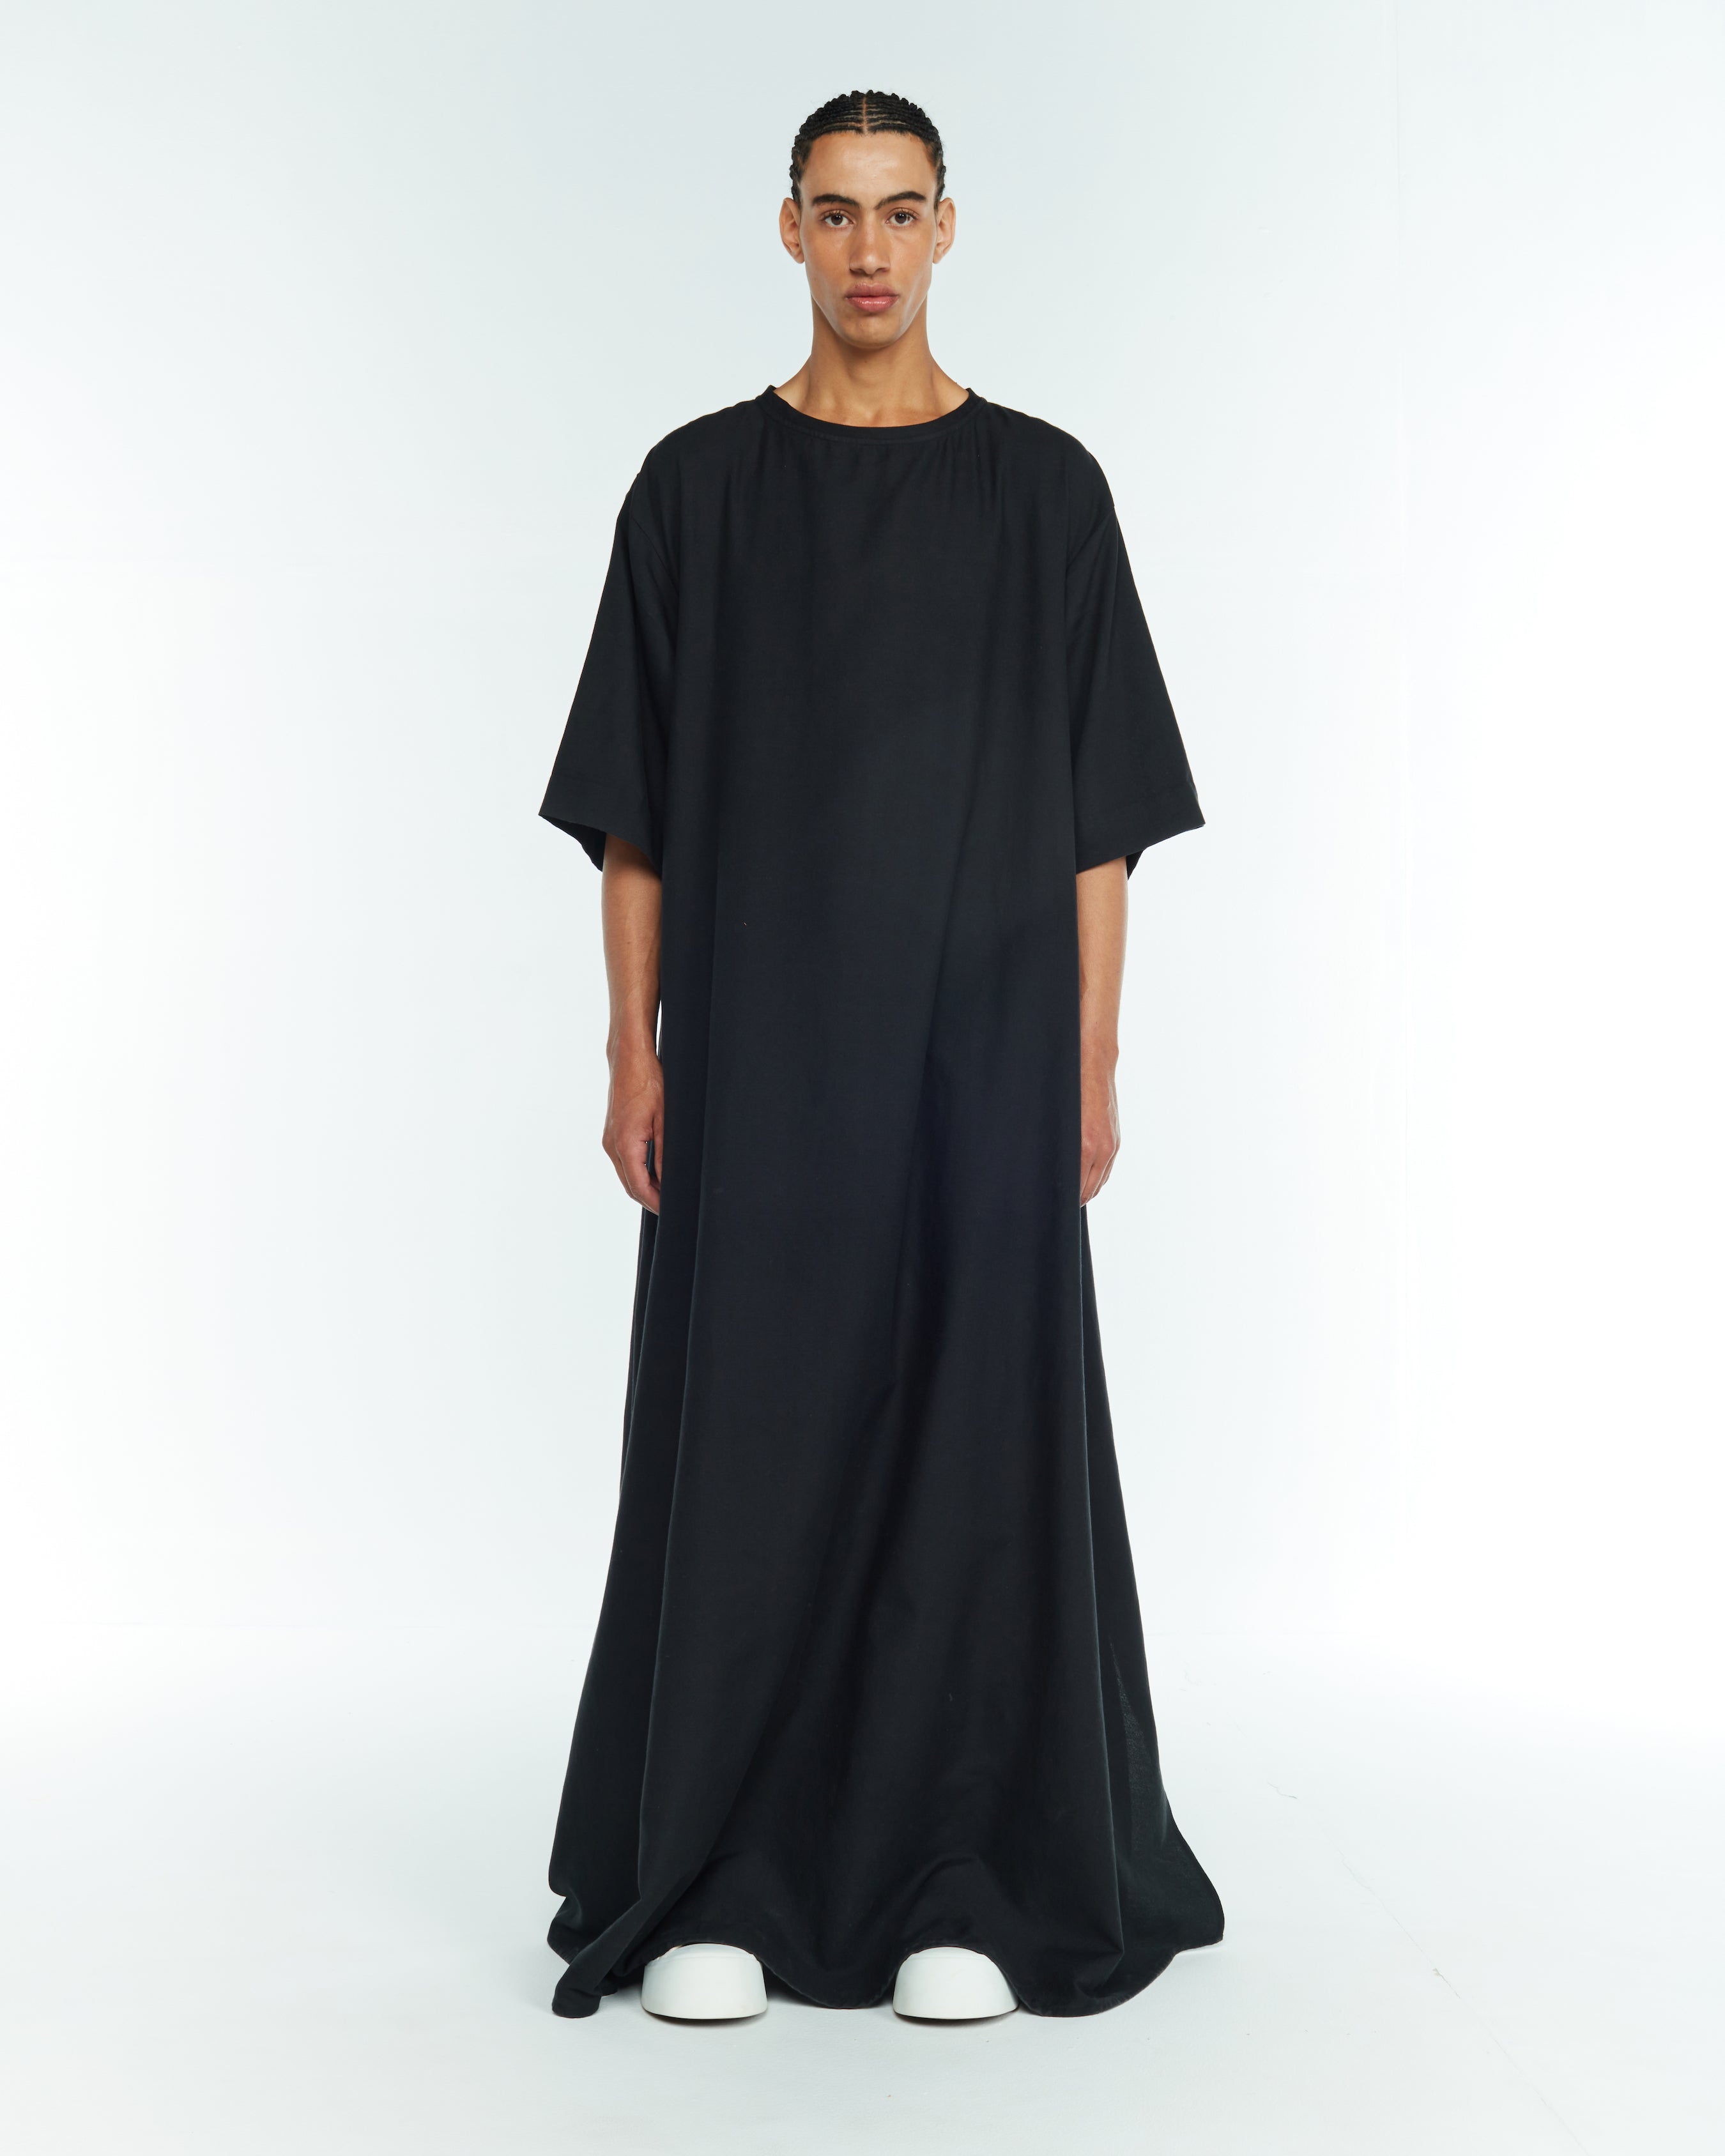 T-SHIRT DRESS : BLACK – Marrakshi Life